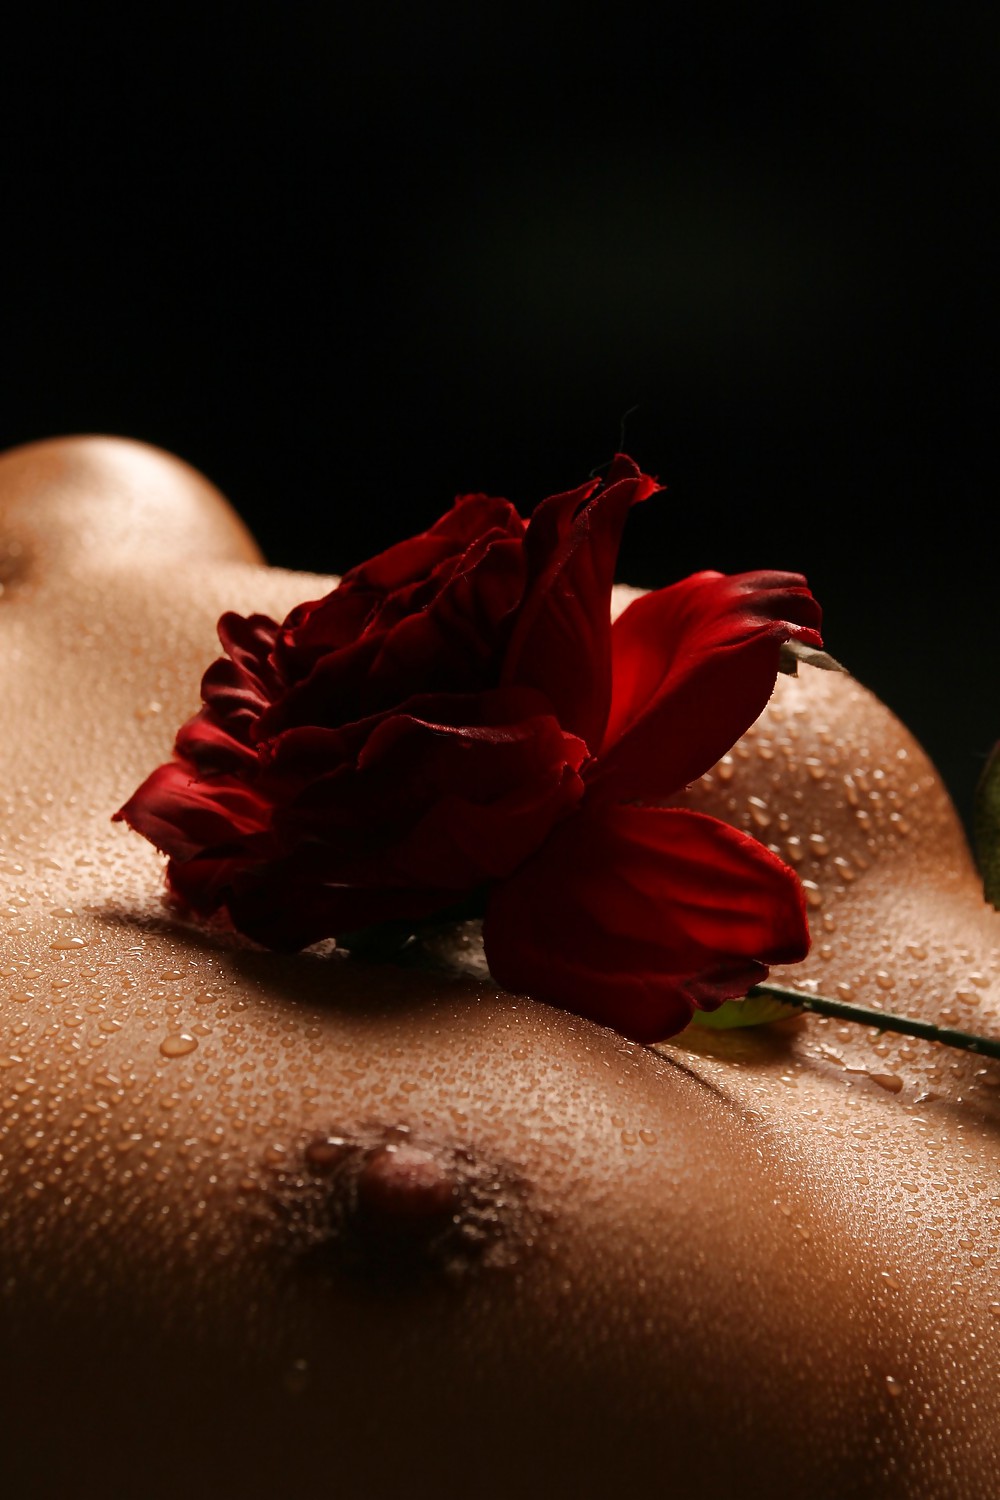 XXX Erotic Art of Roses - Session 2